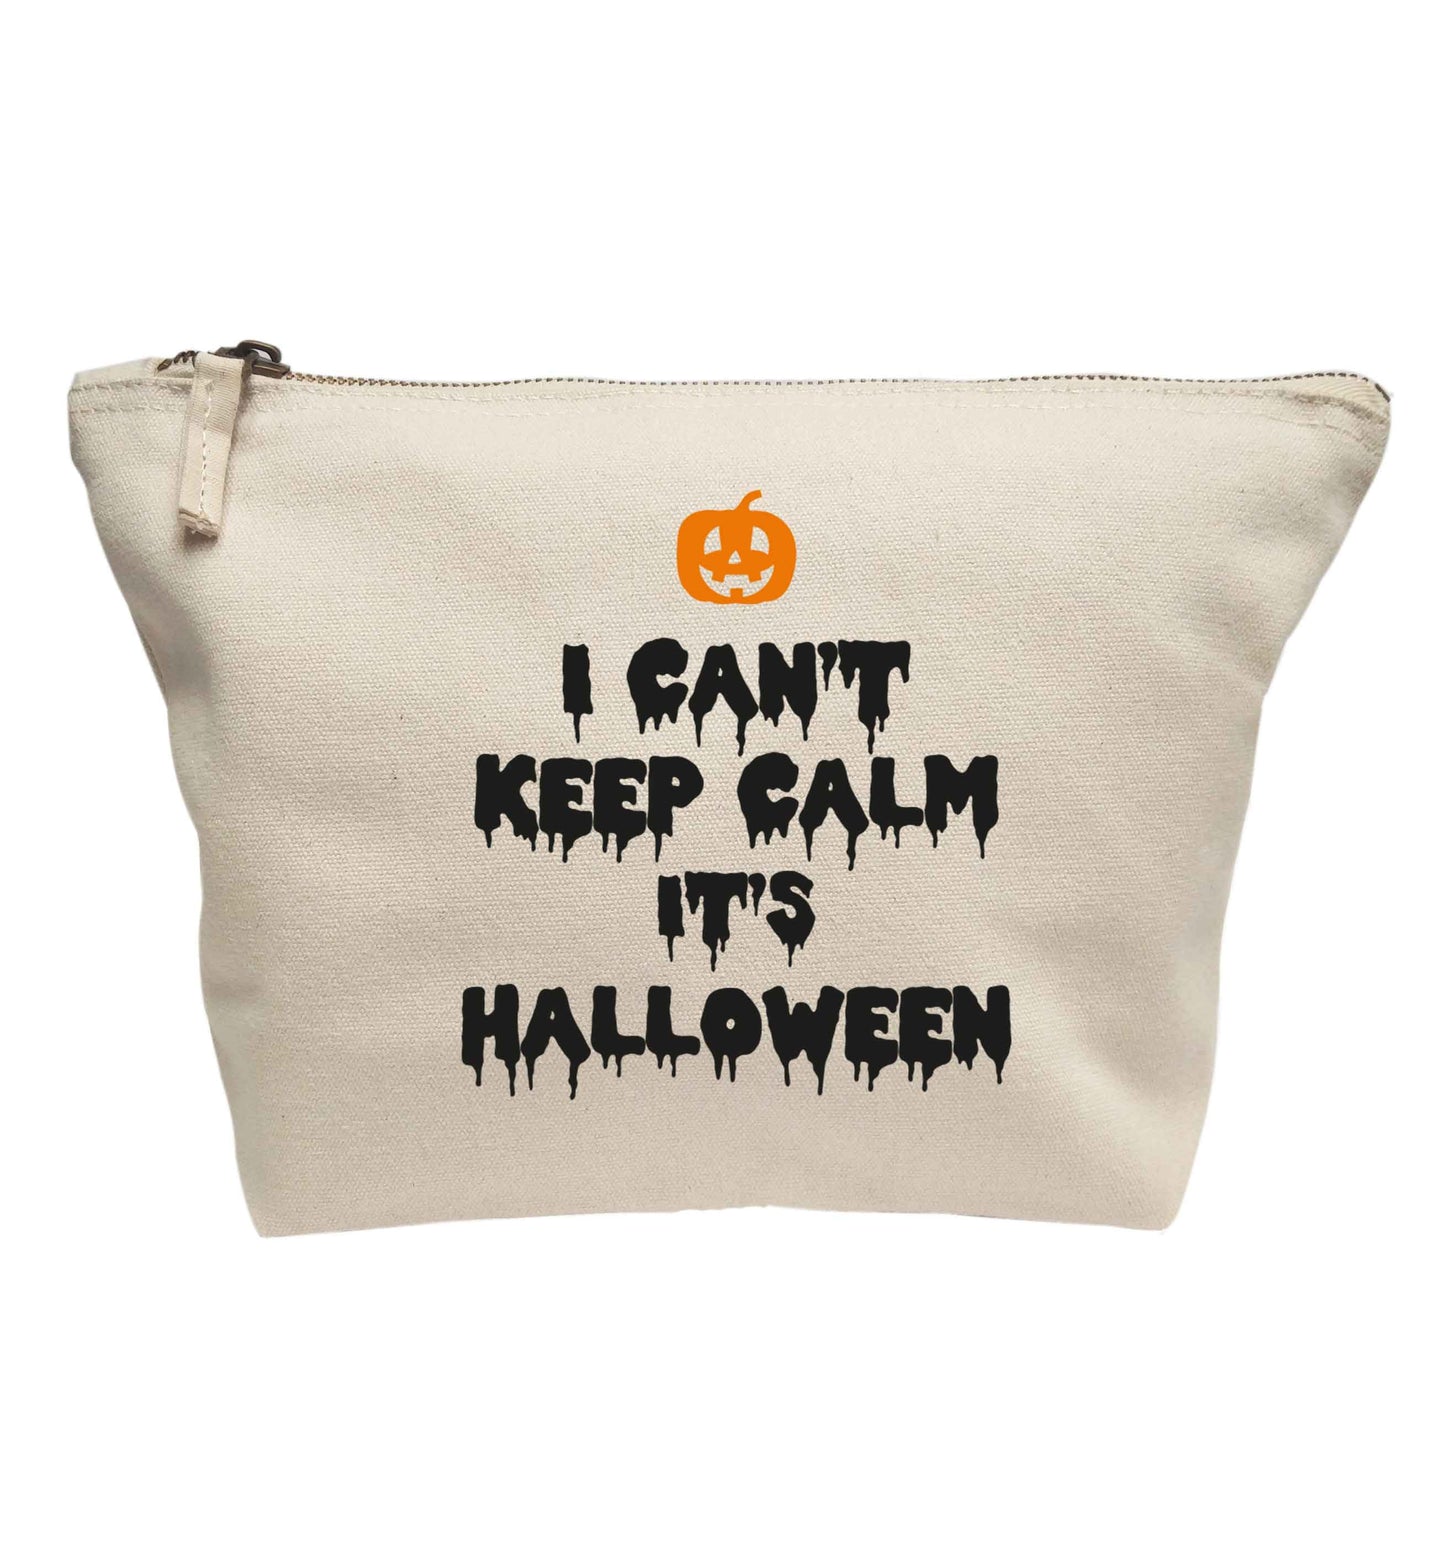 I can't keep calm it's halloween | Makeup / wash bag